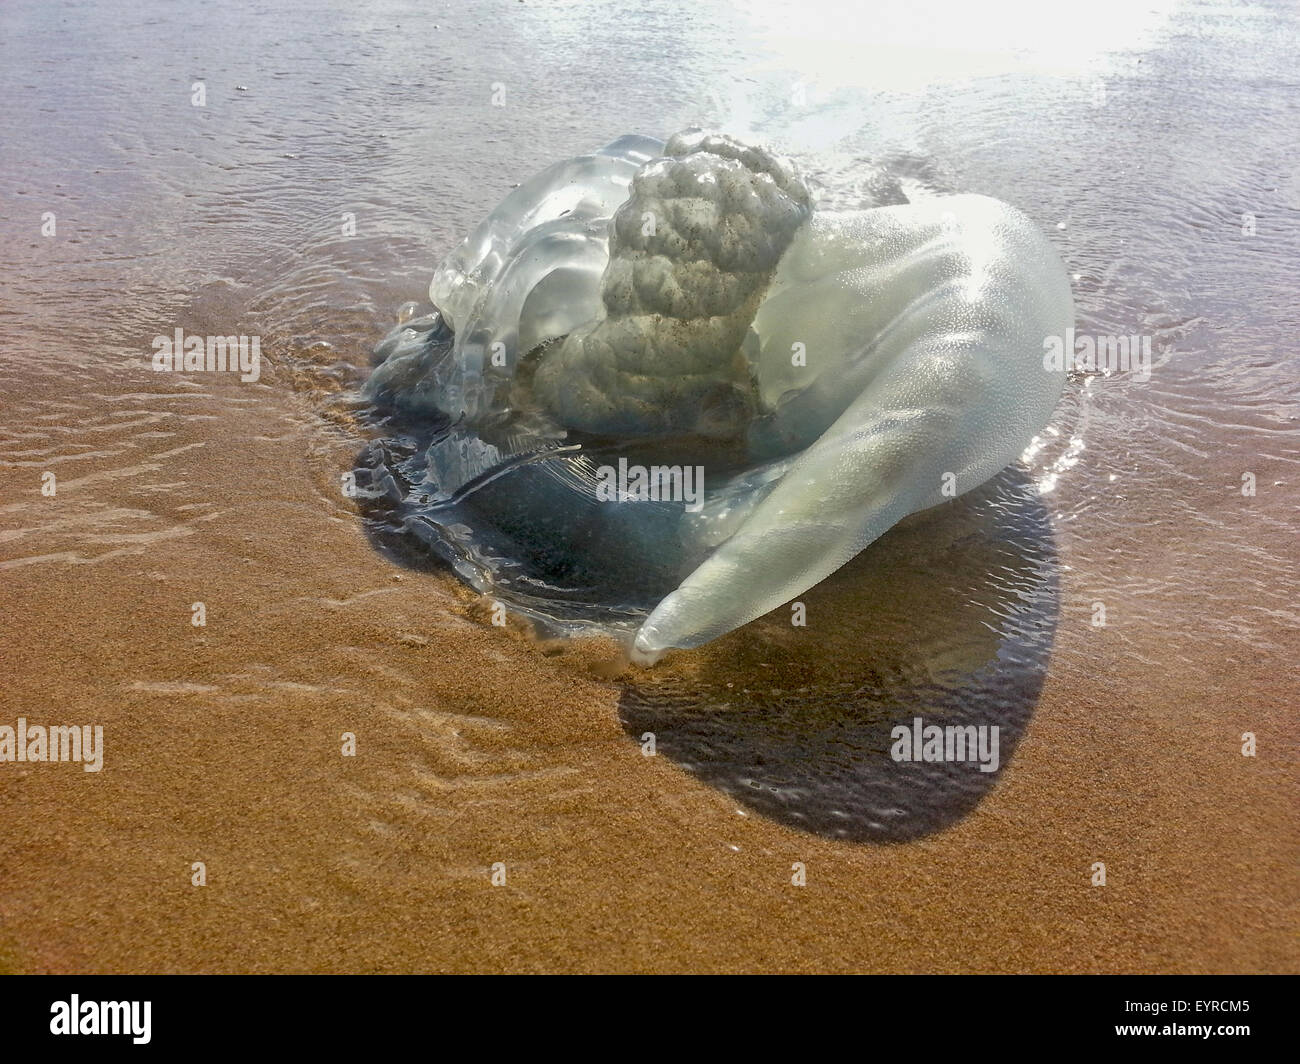 Jellyfish on the beach Stock Photo